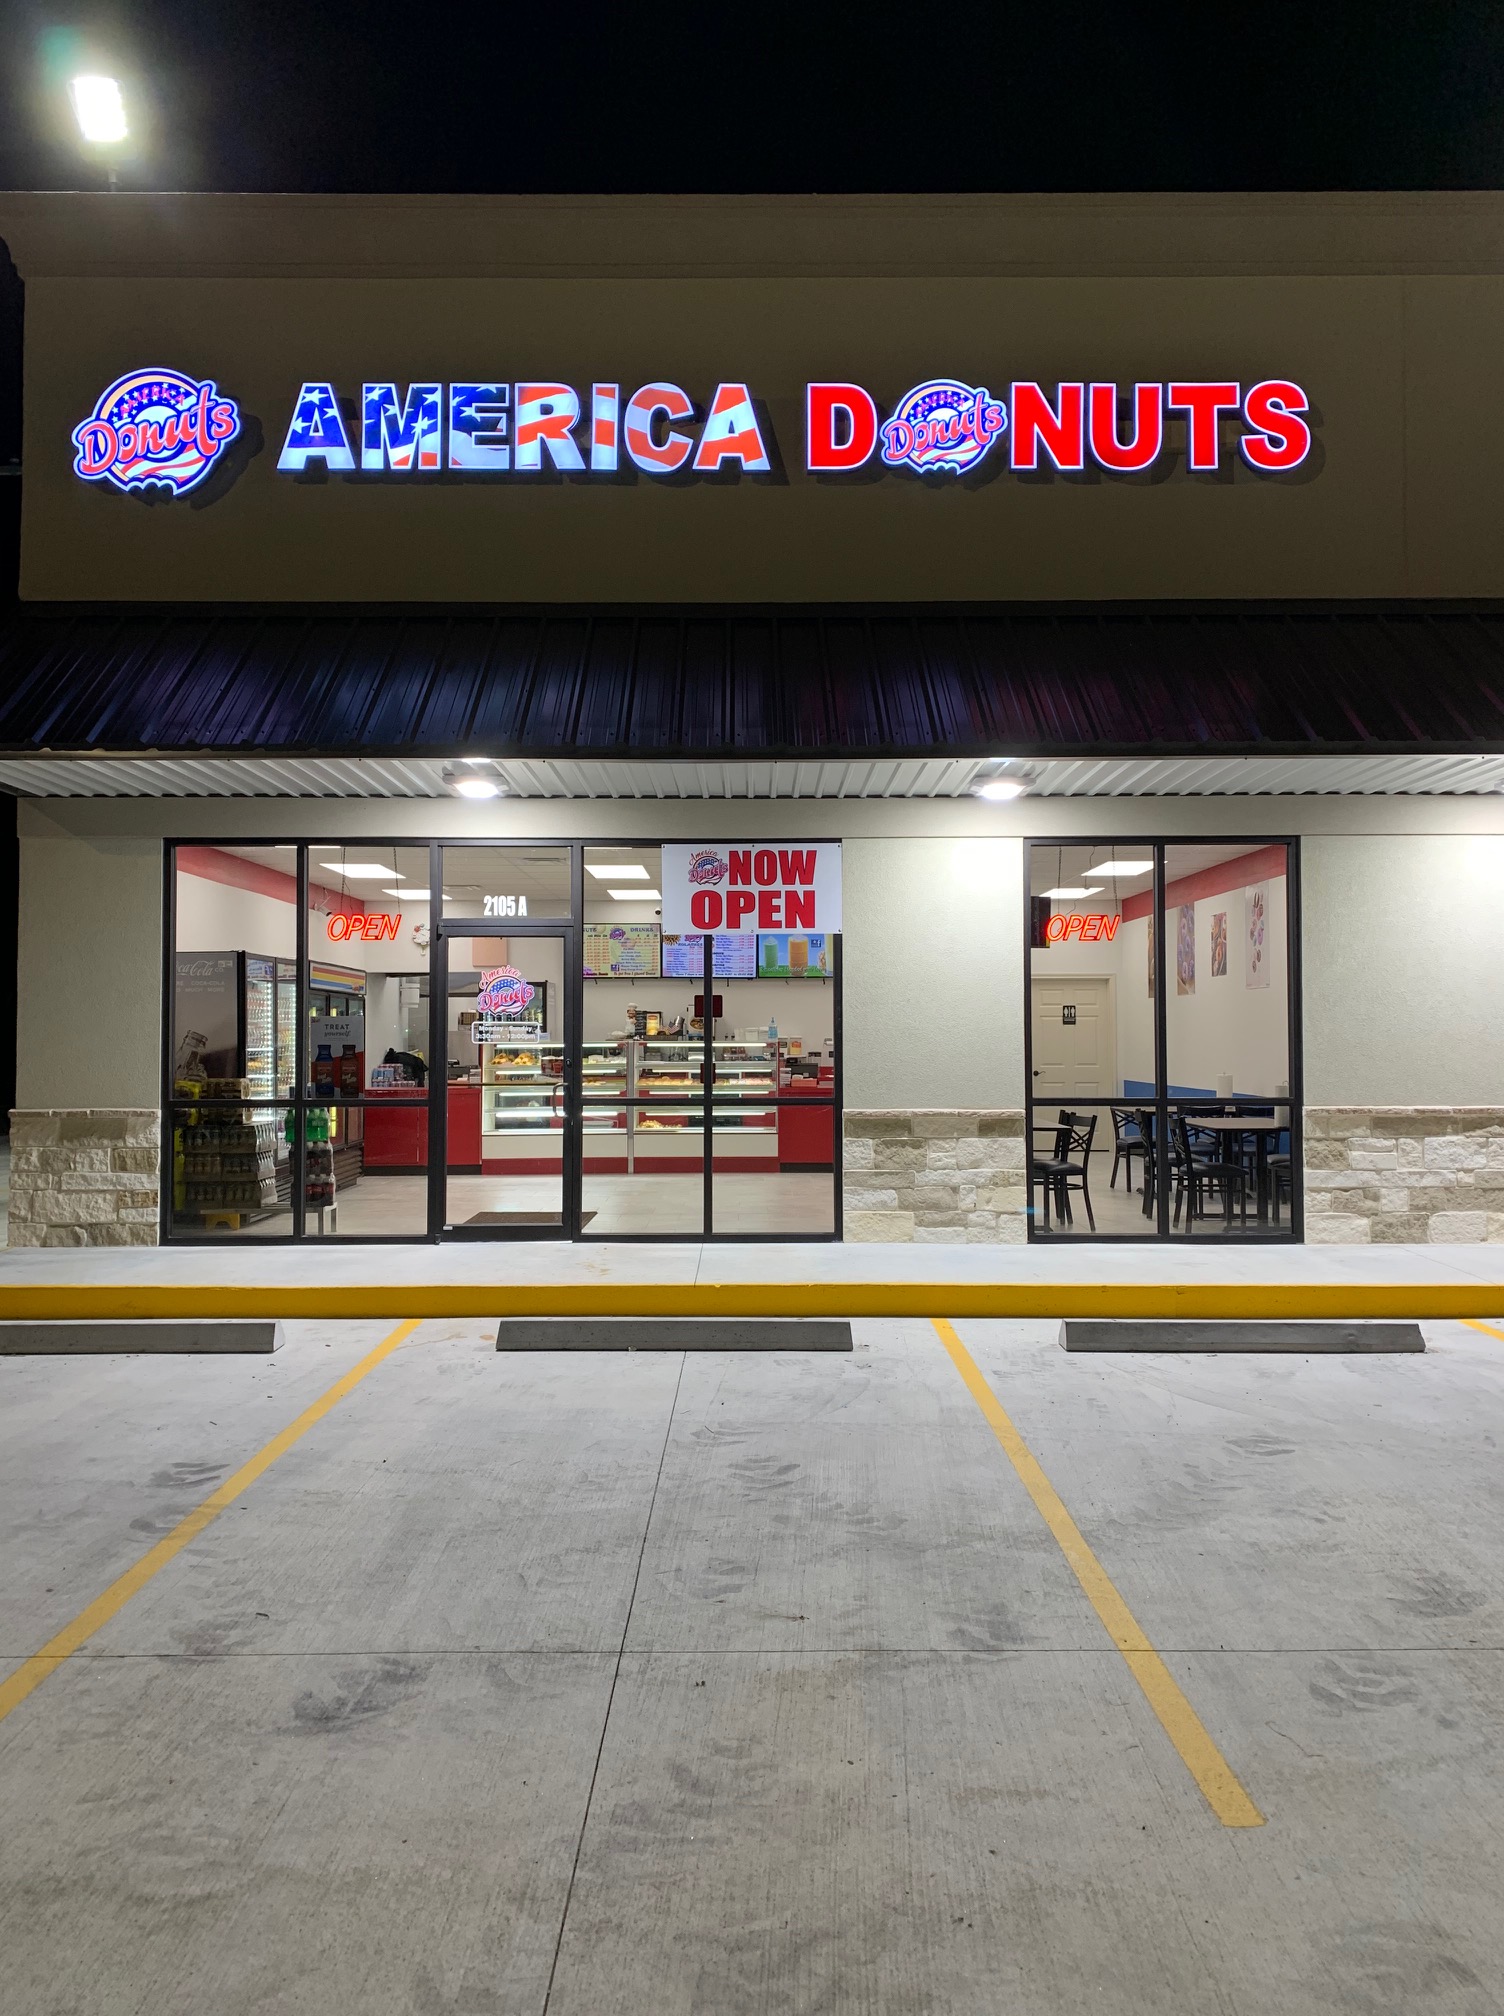 America donuts